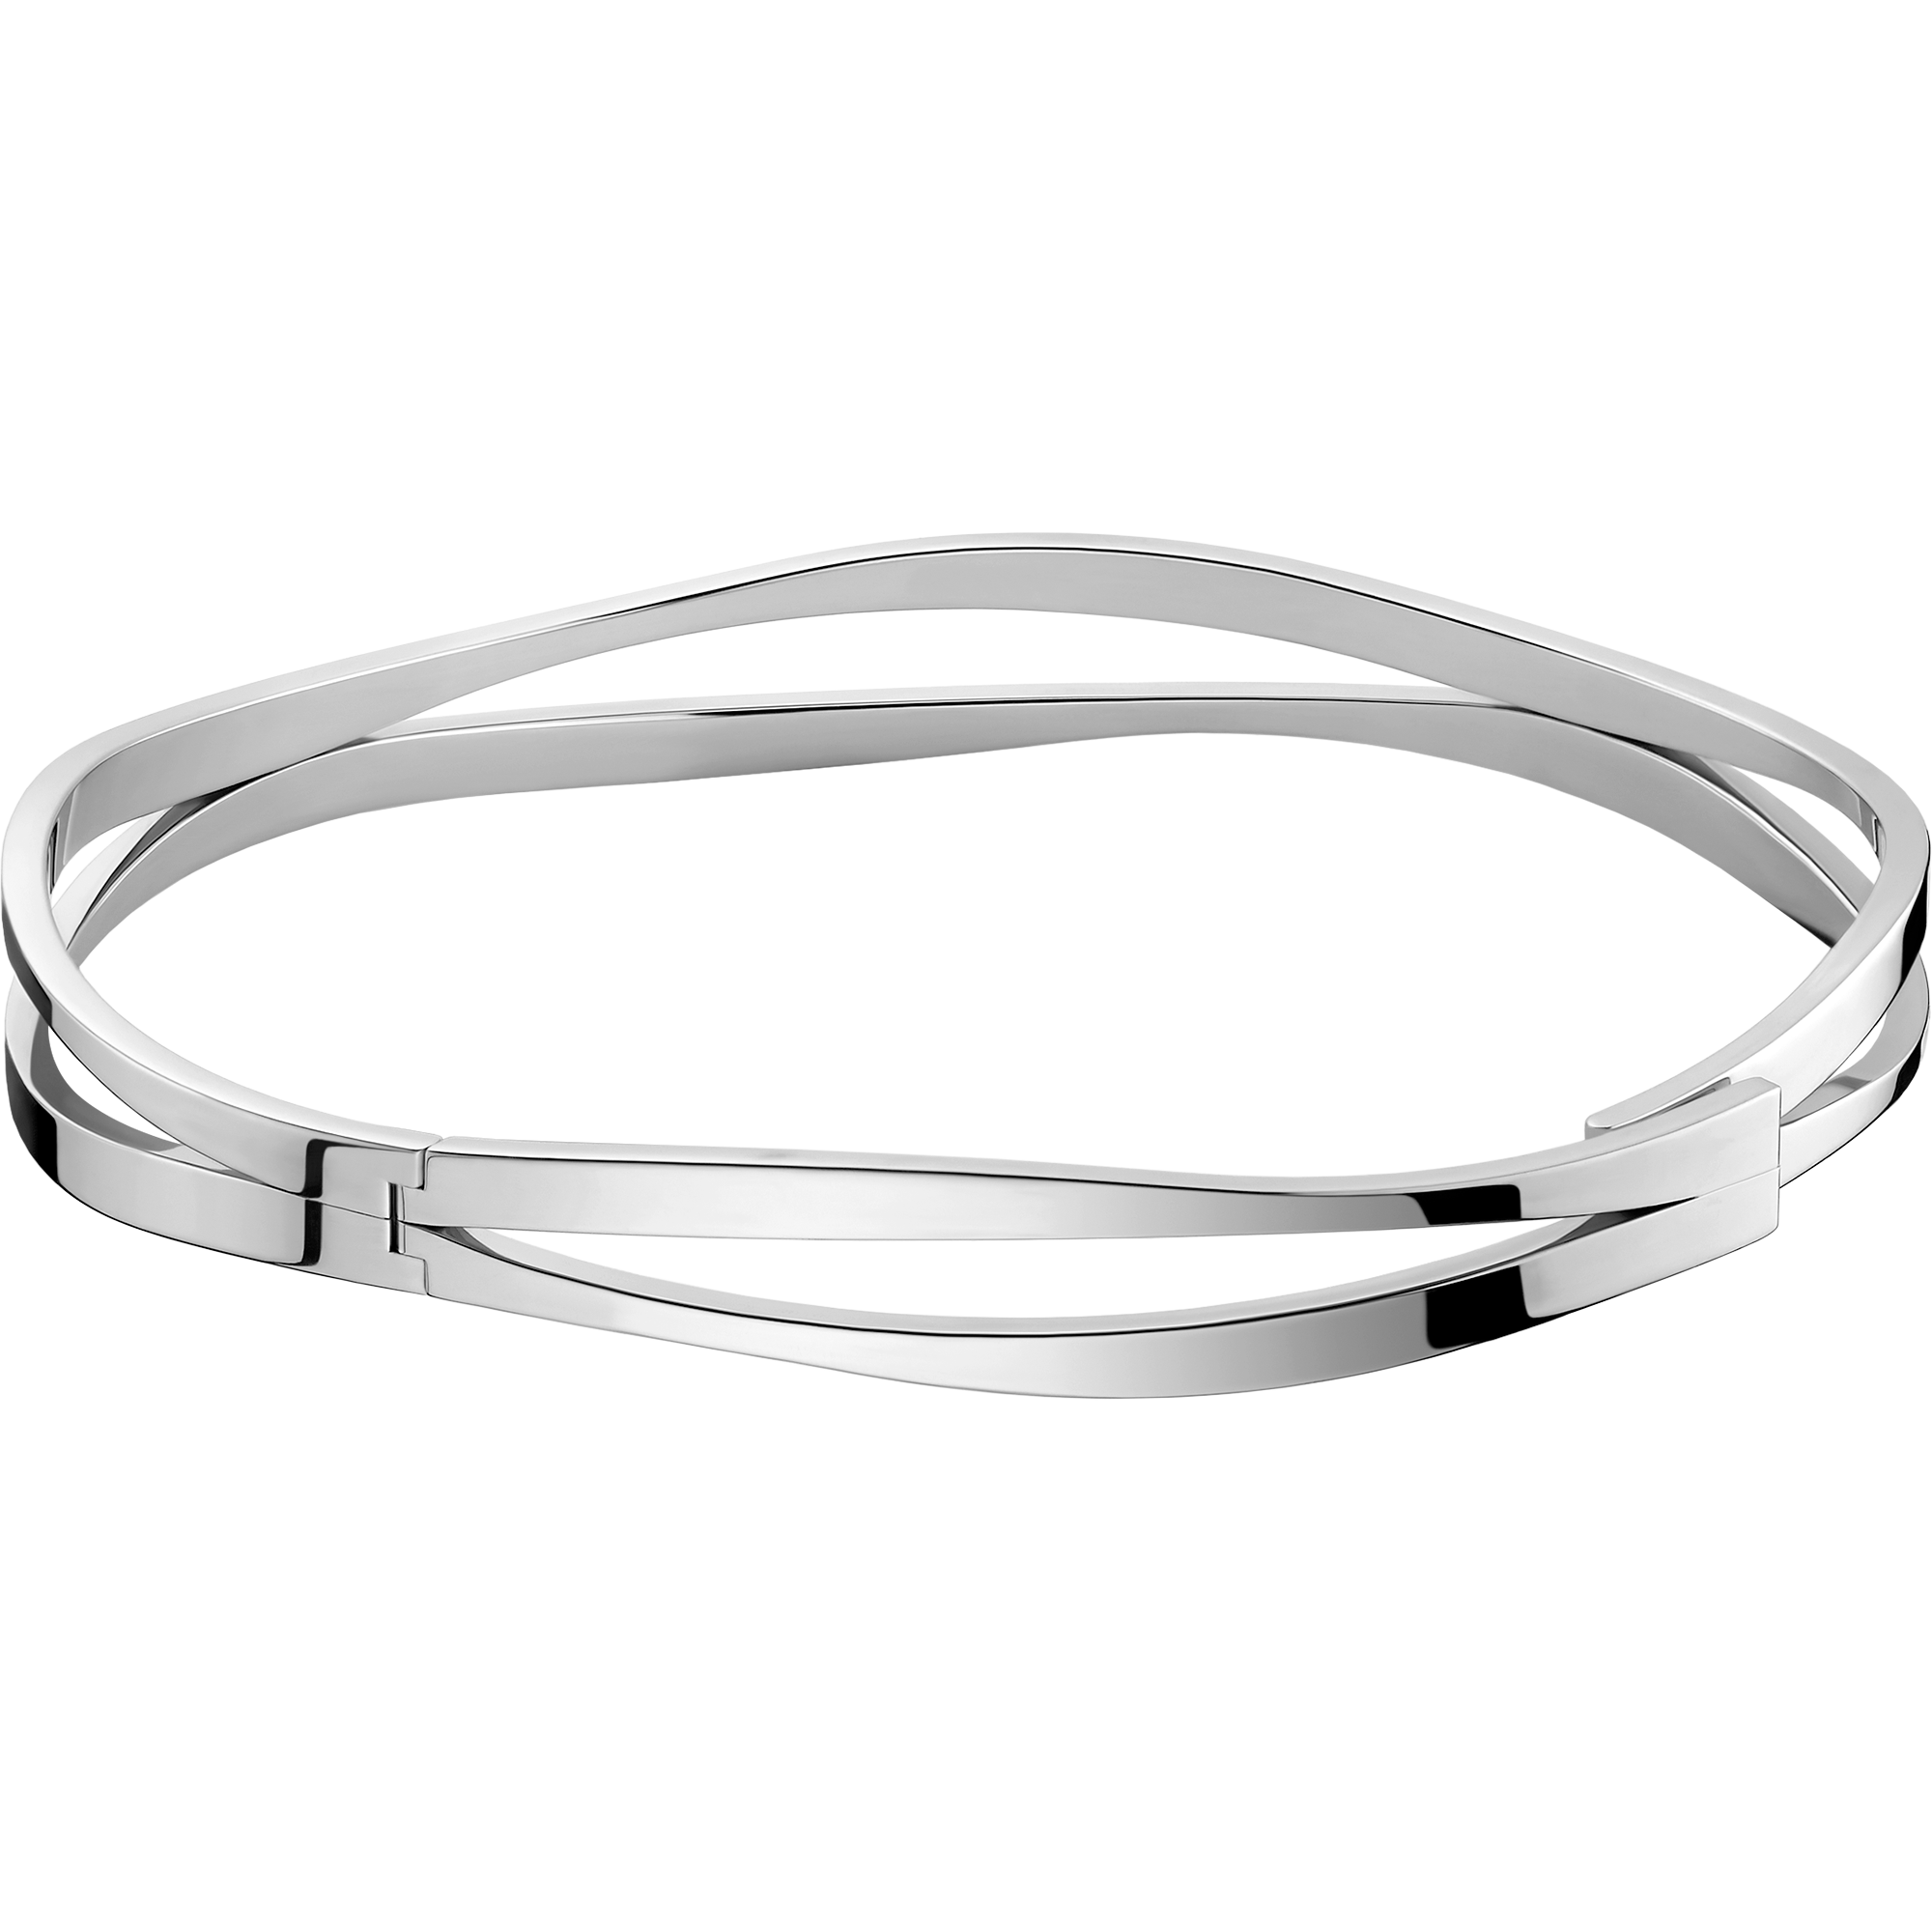 Ladymatic Bracelet, 18K white gold - B604BC0000102